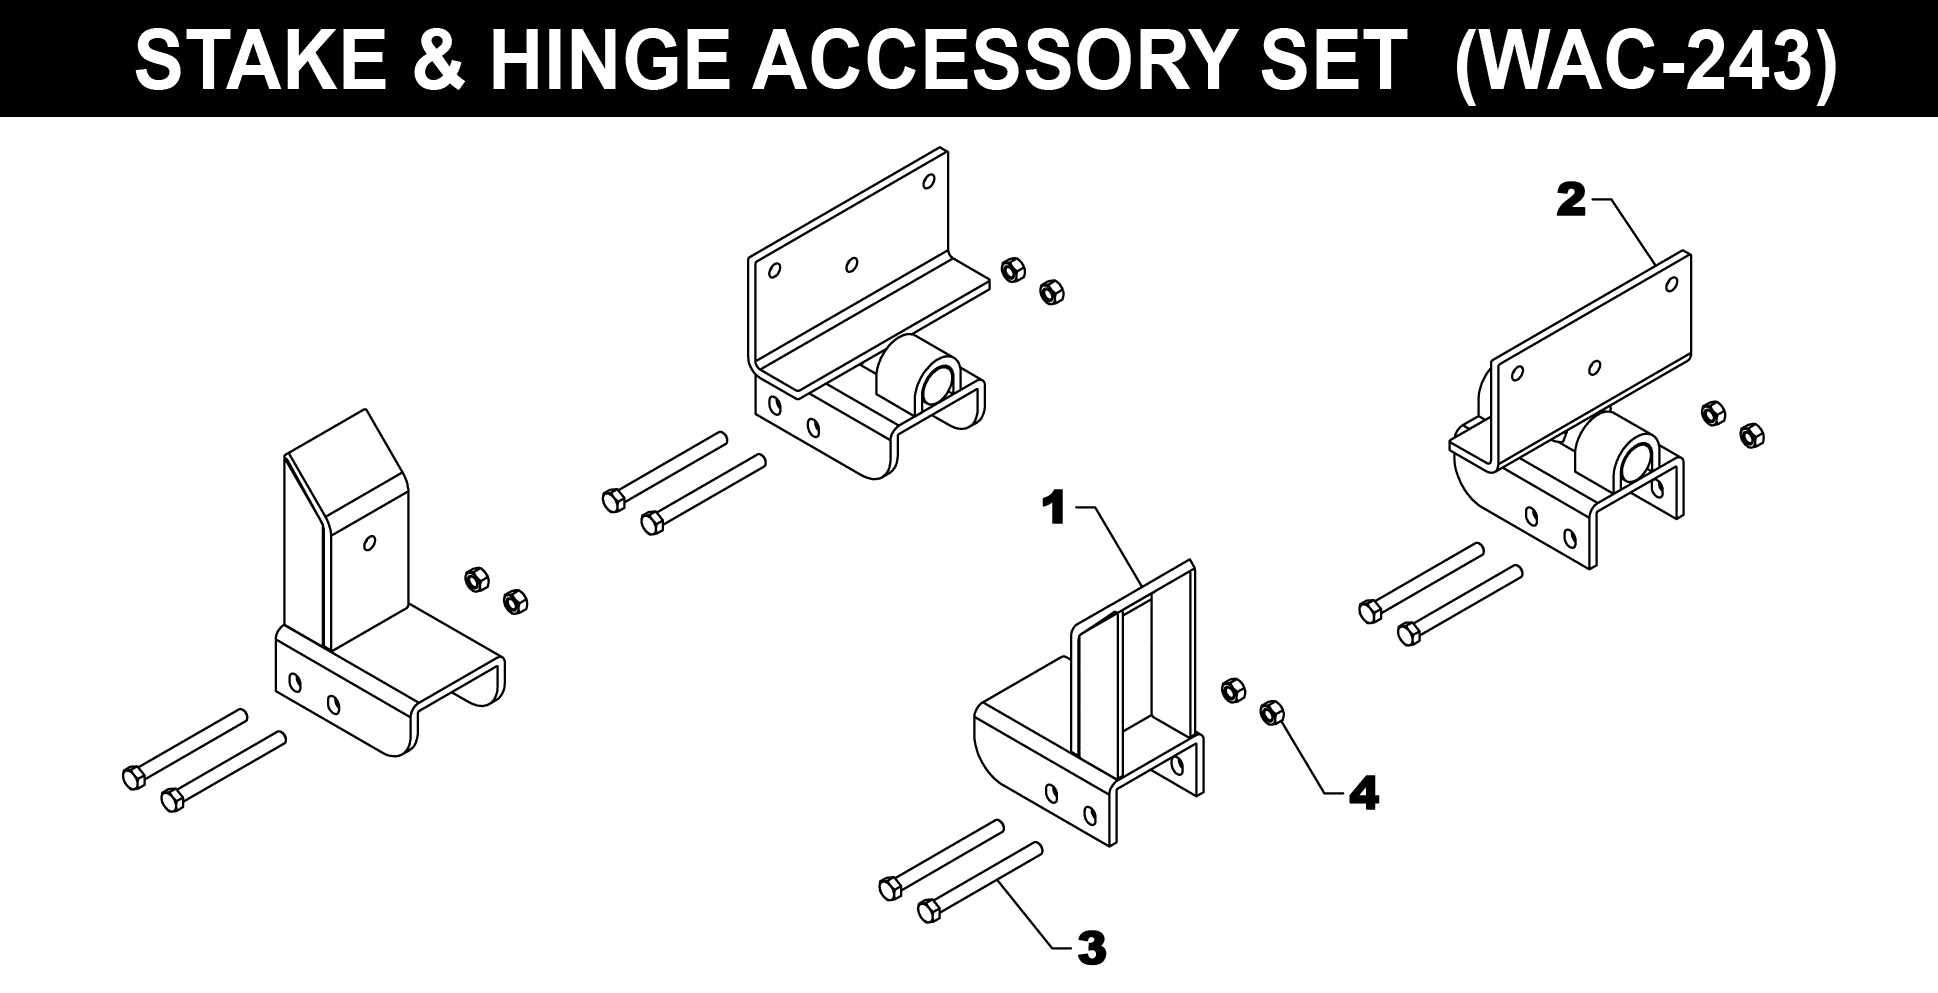 Stake & Hinge Accessory Set - WAC-243